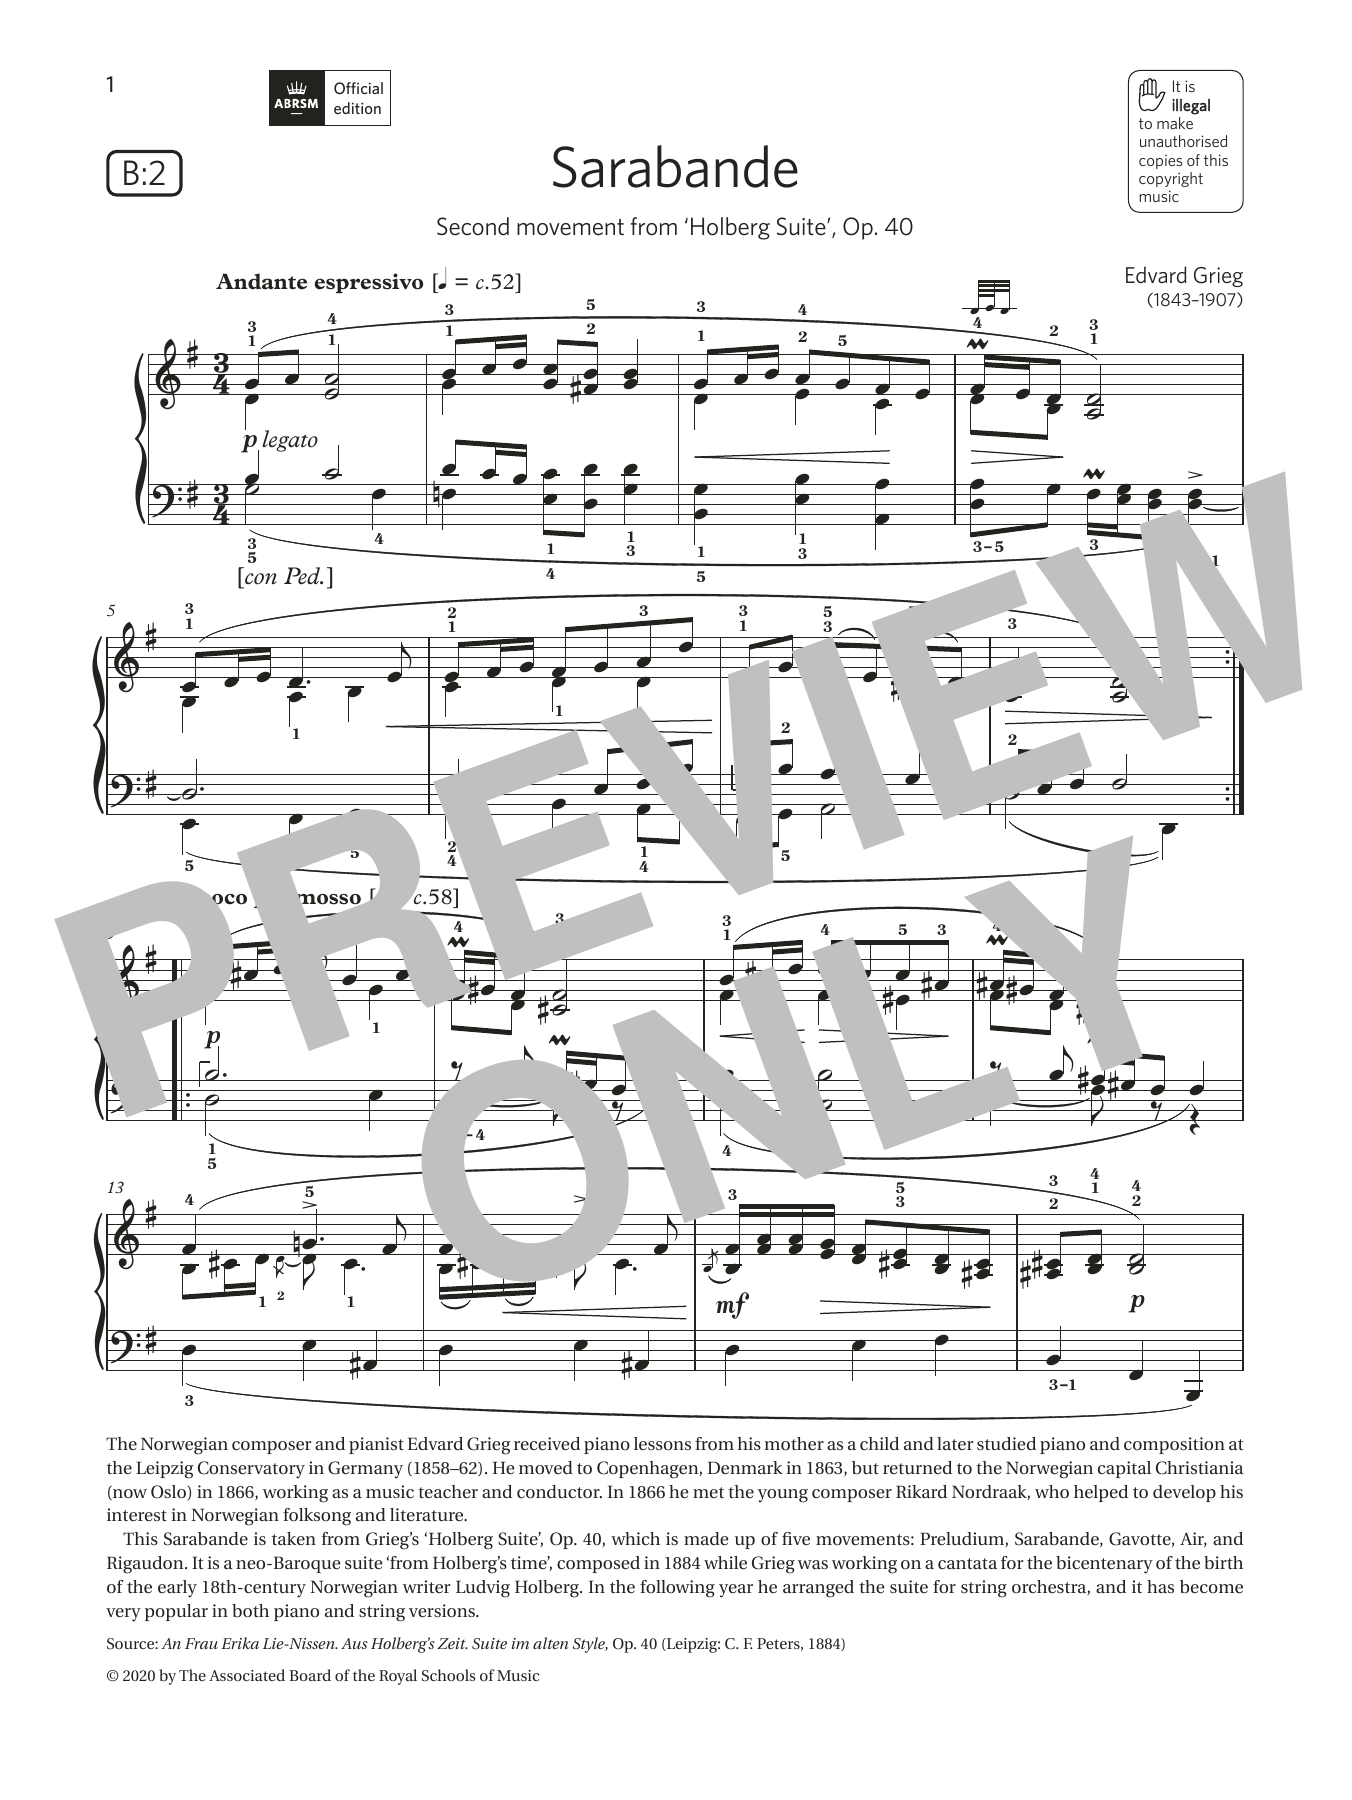 Download Edvard Grieg Sarabande (Grade 7, list B2, from the A Sheet Music